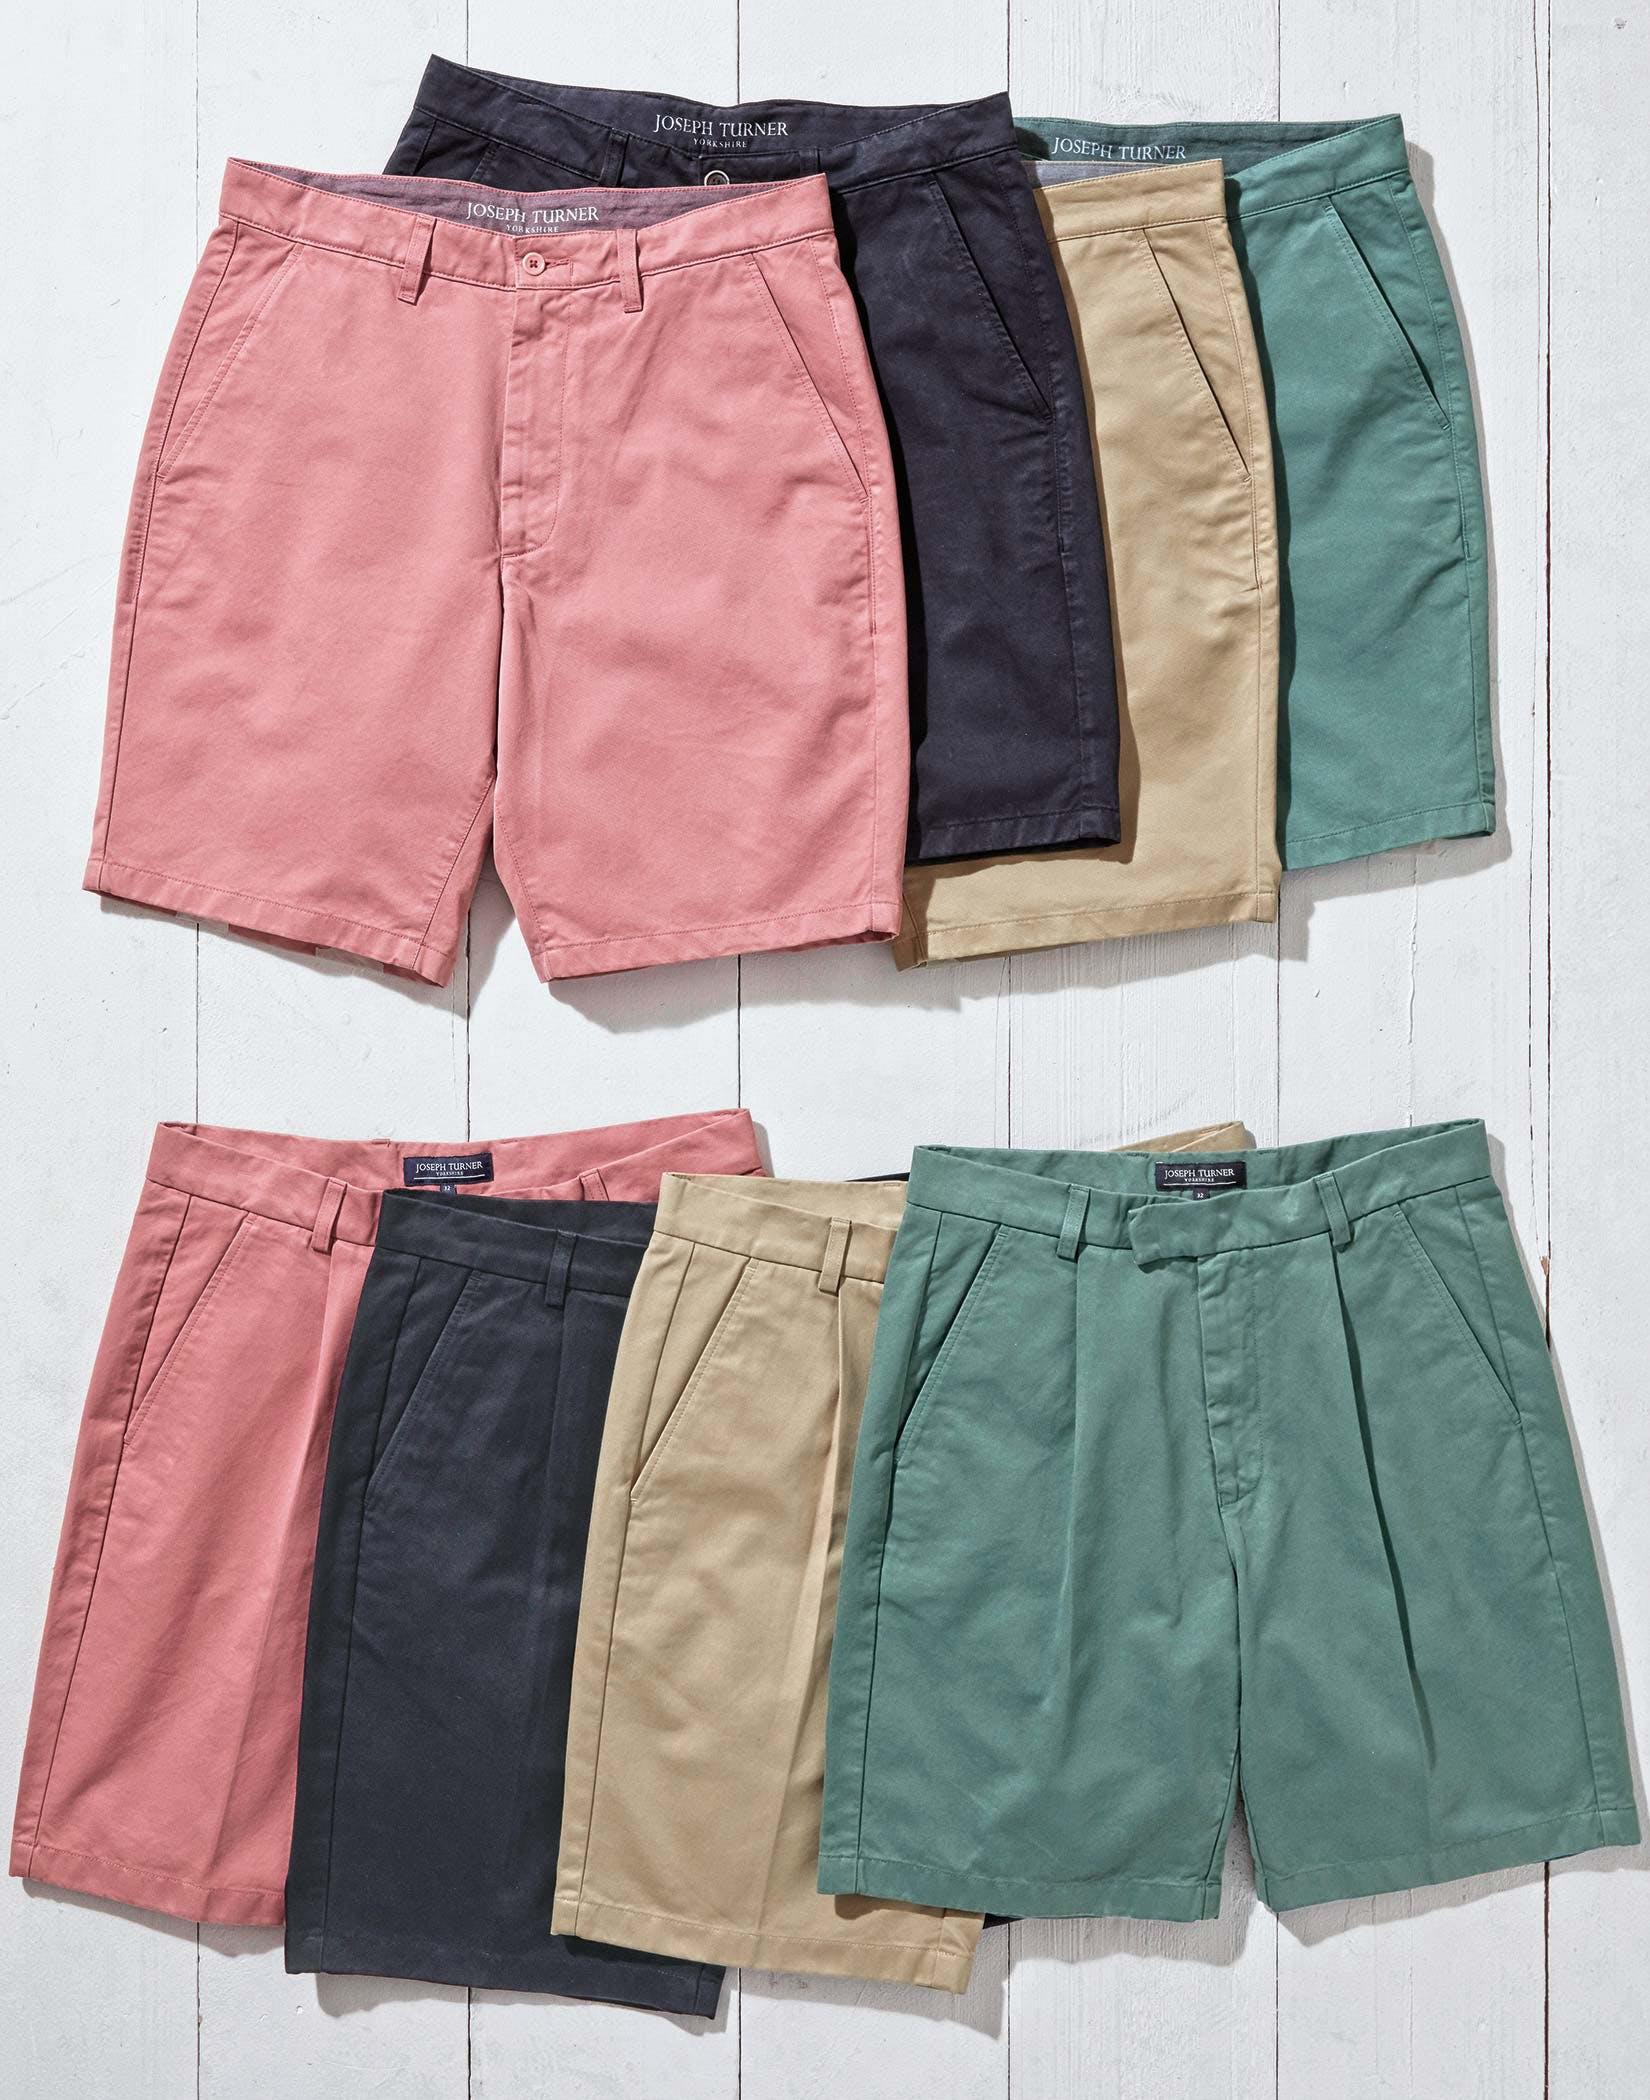 Flat Front Shorts - Navy